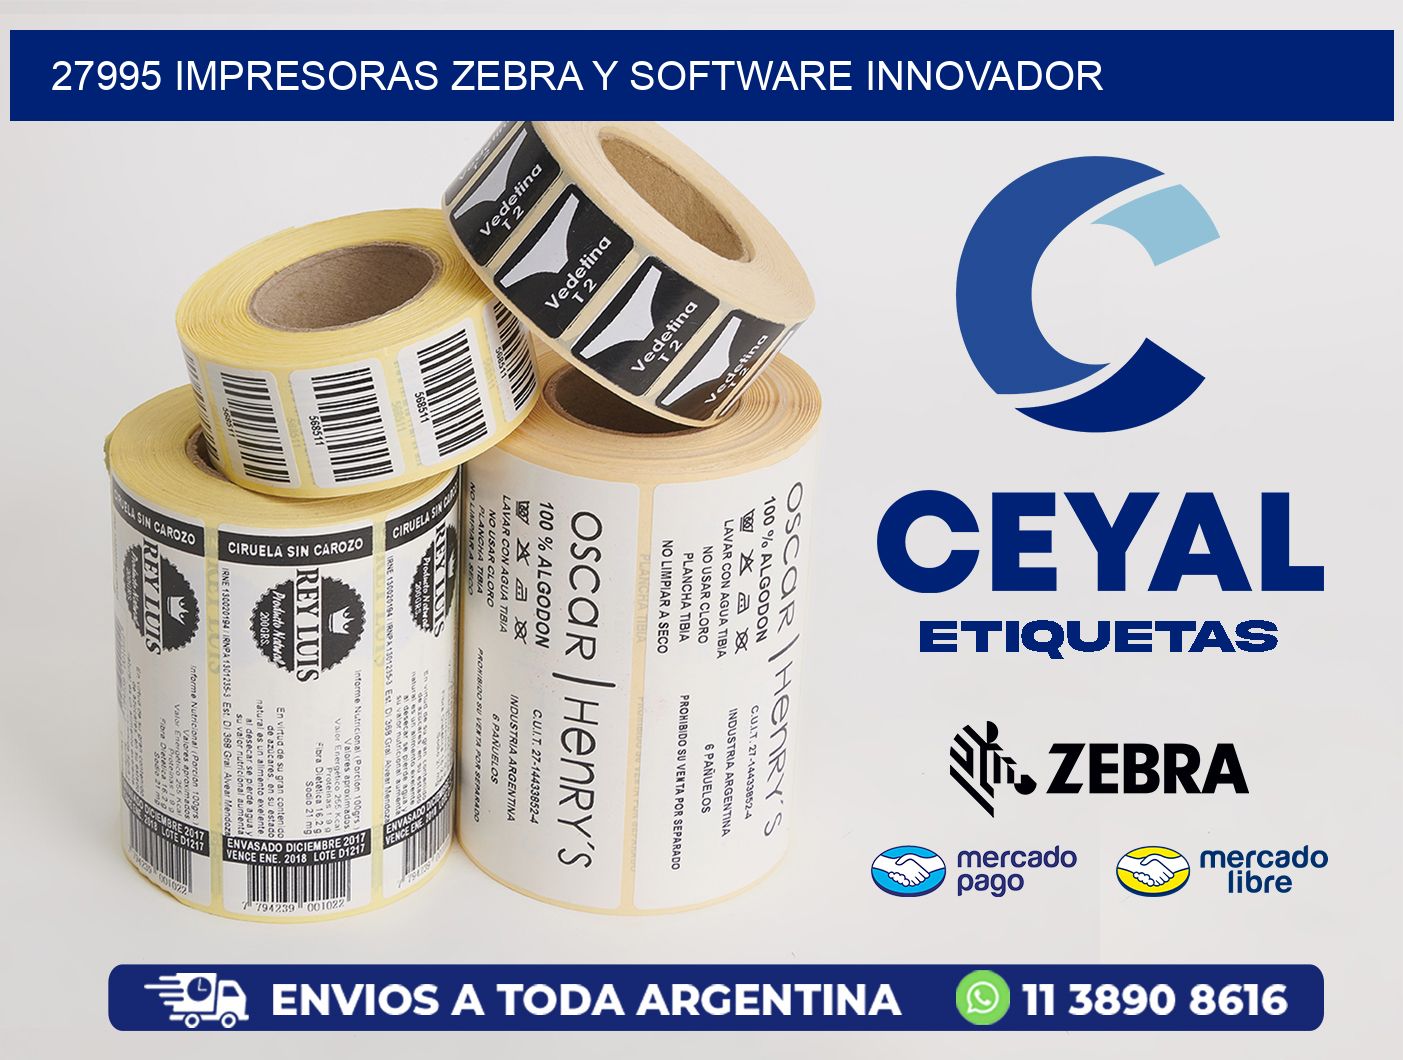 27995 Impresoras Zebra y Software Innovador